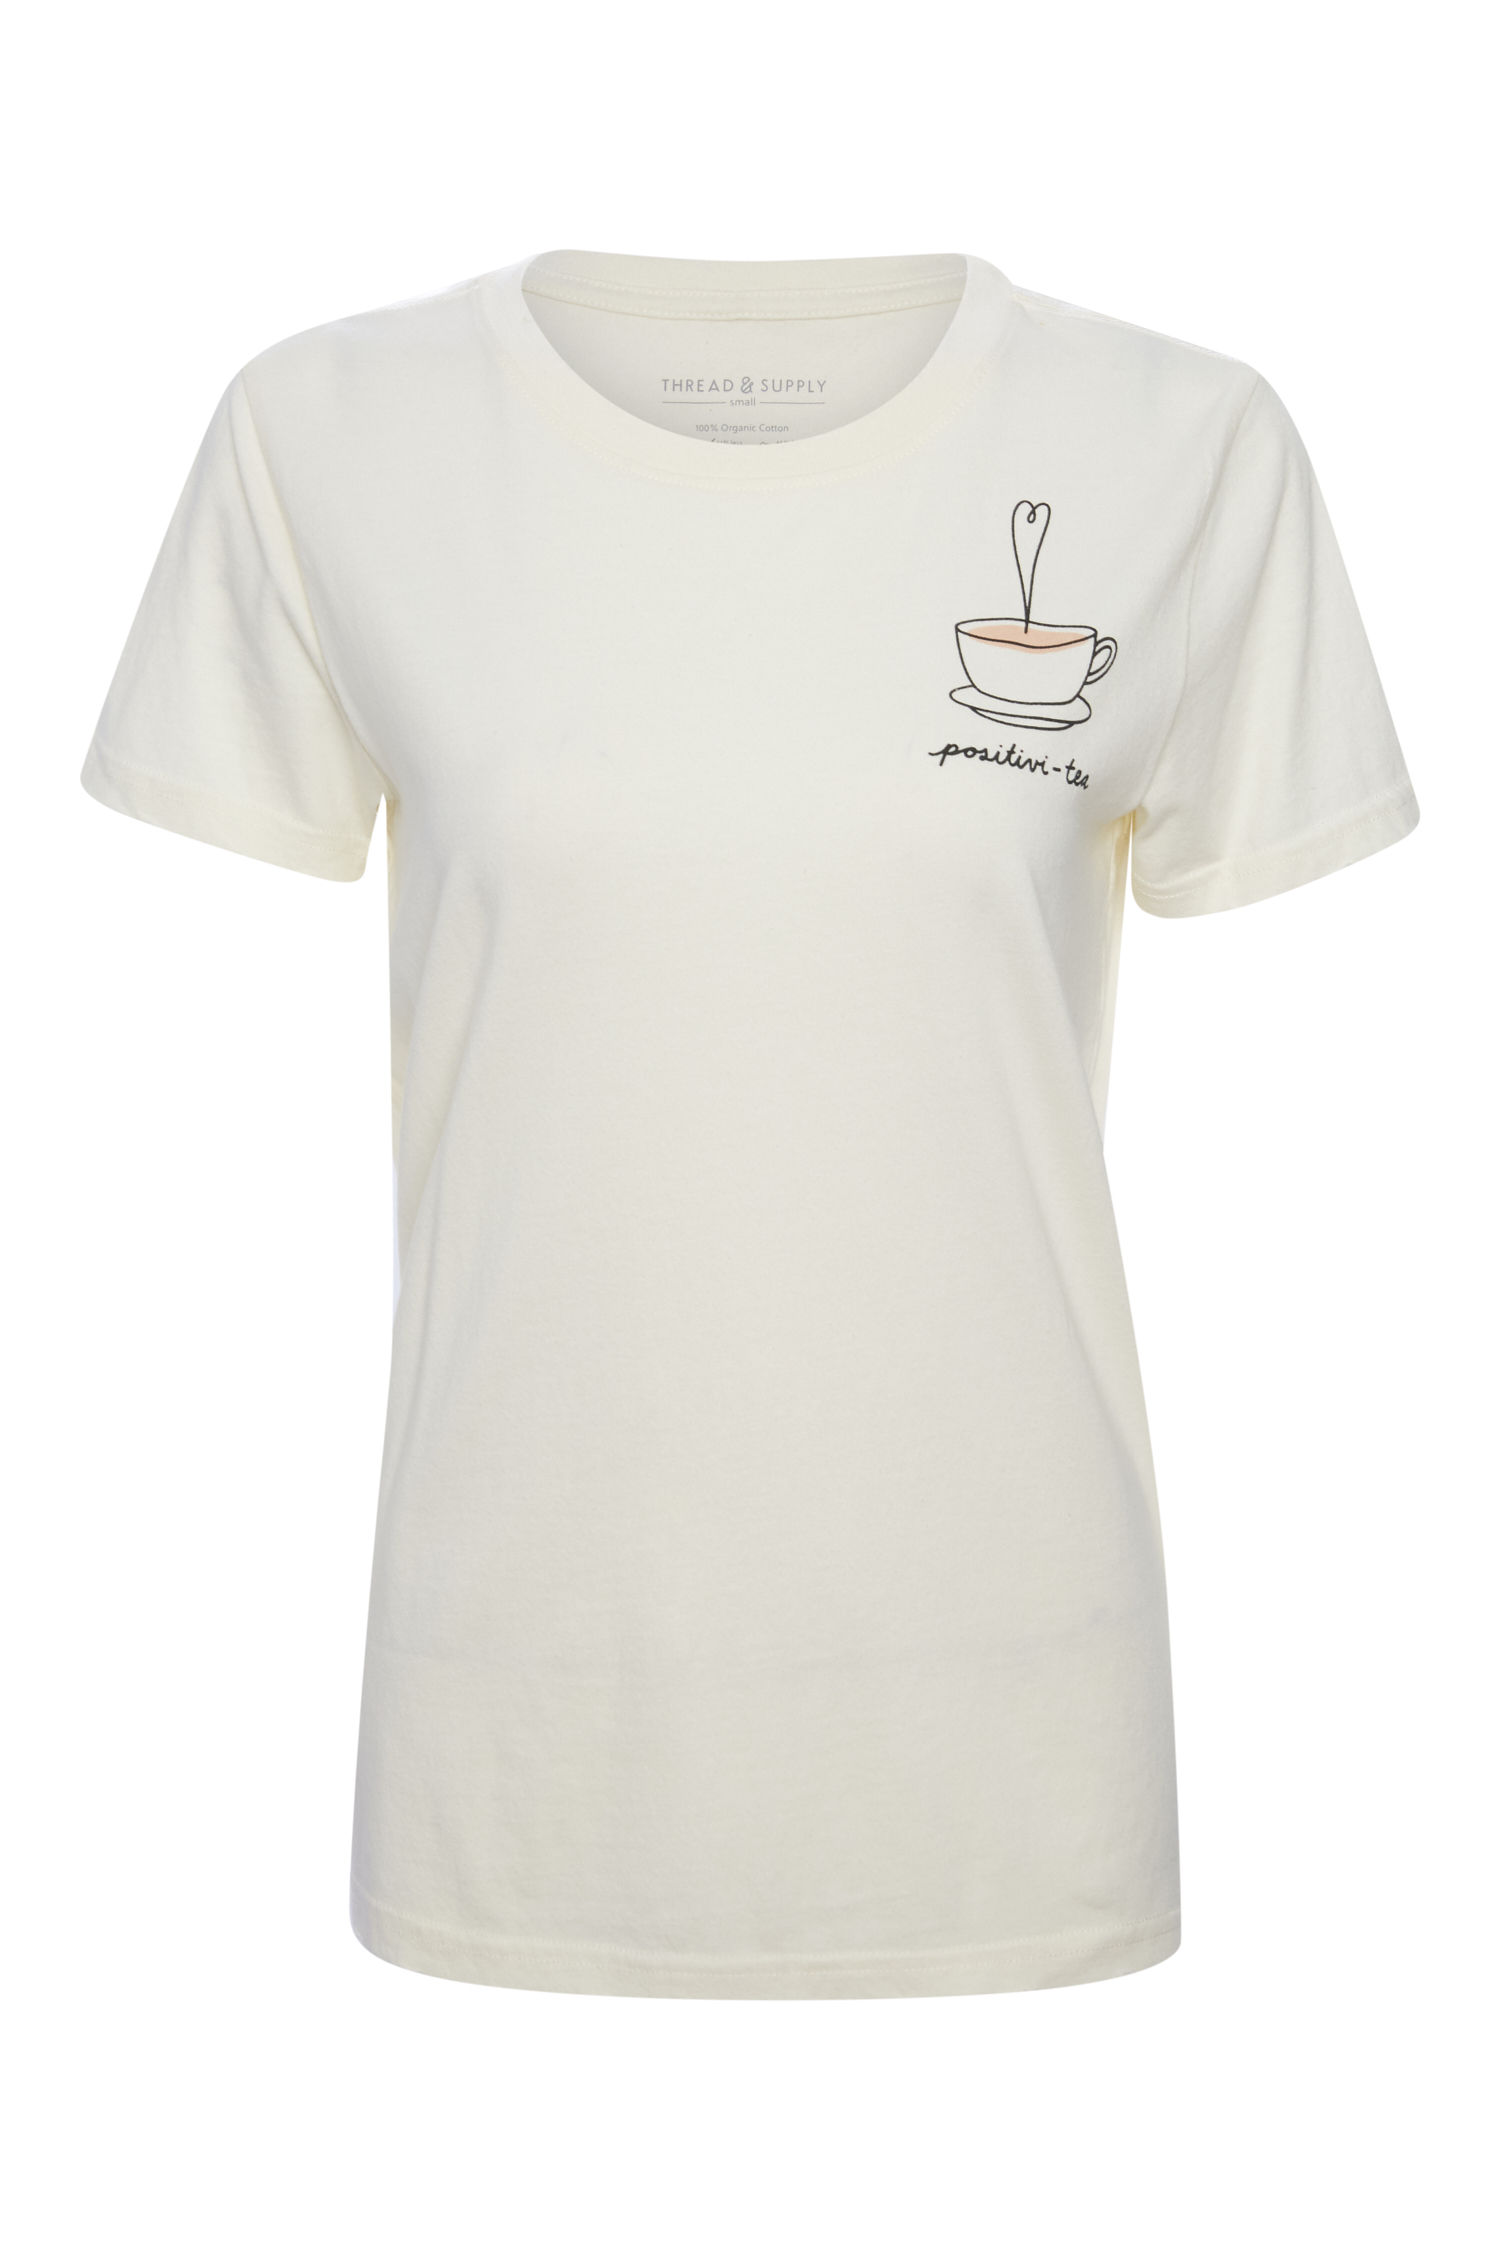 Thread & Supply Positivi-Tea T-Shirt